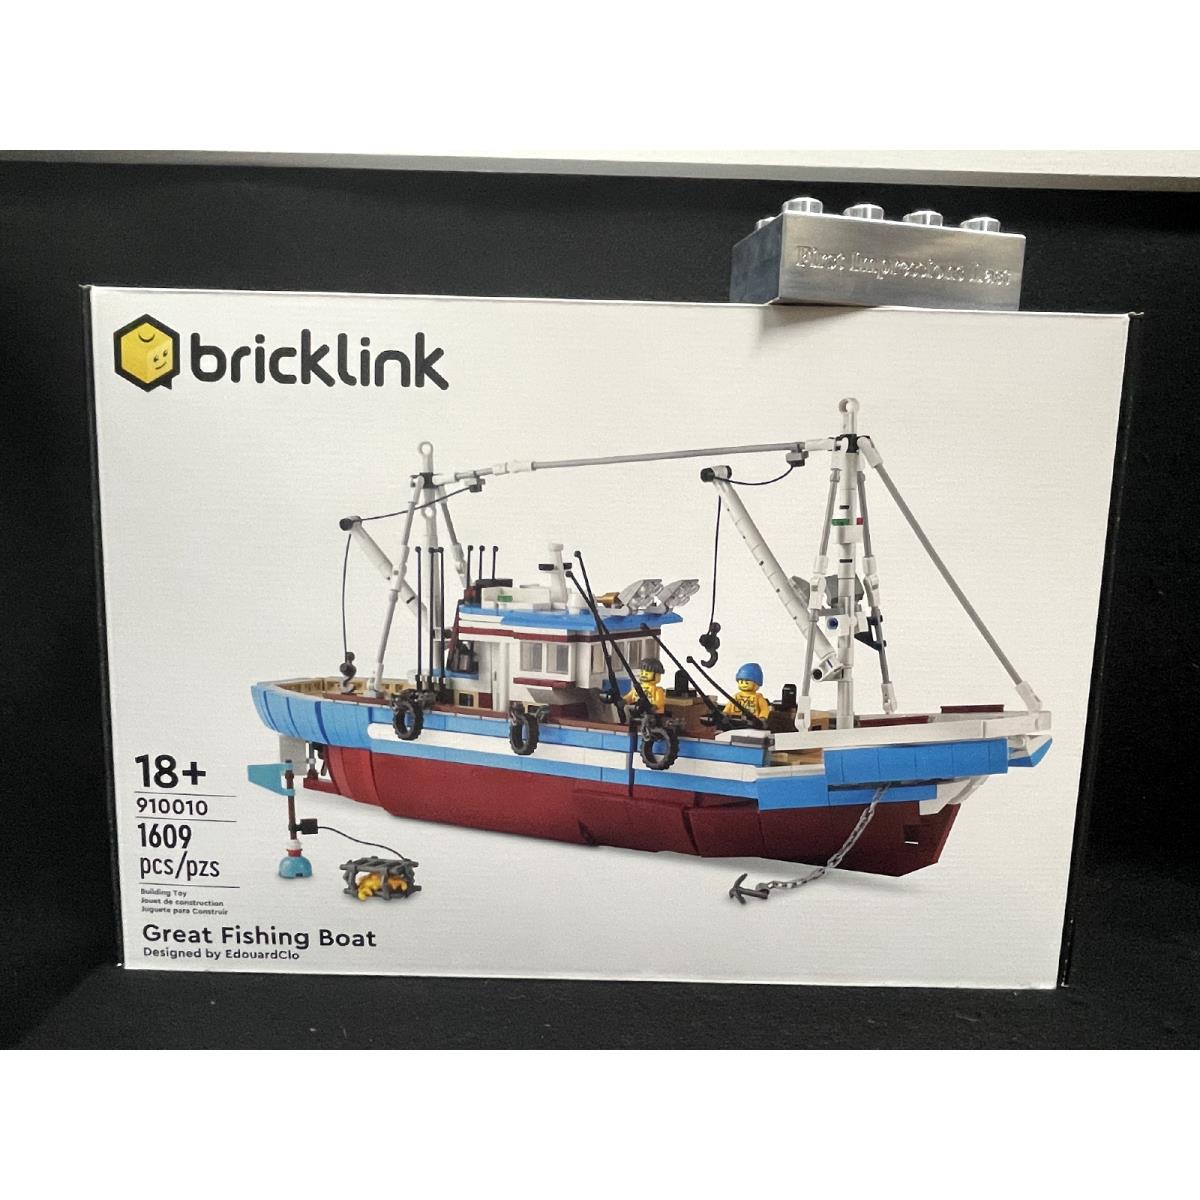 Lego 910010 2021 Bricklink Designer Program Great Fishing Boat Limited Edition